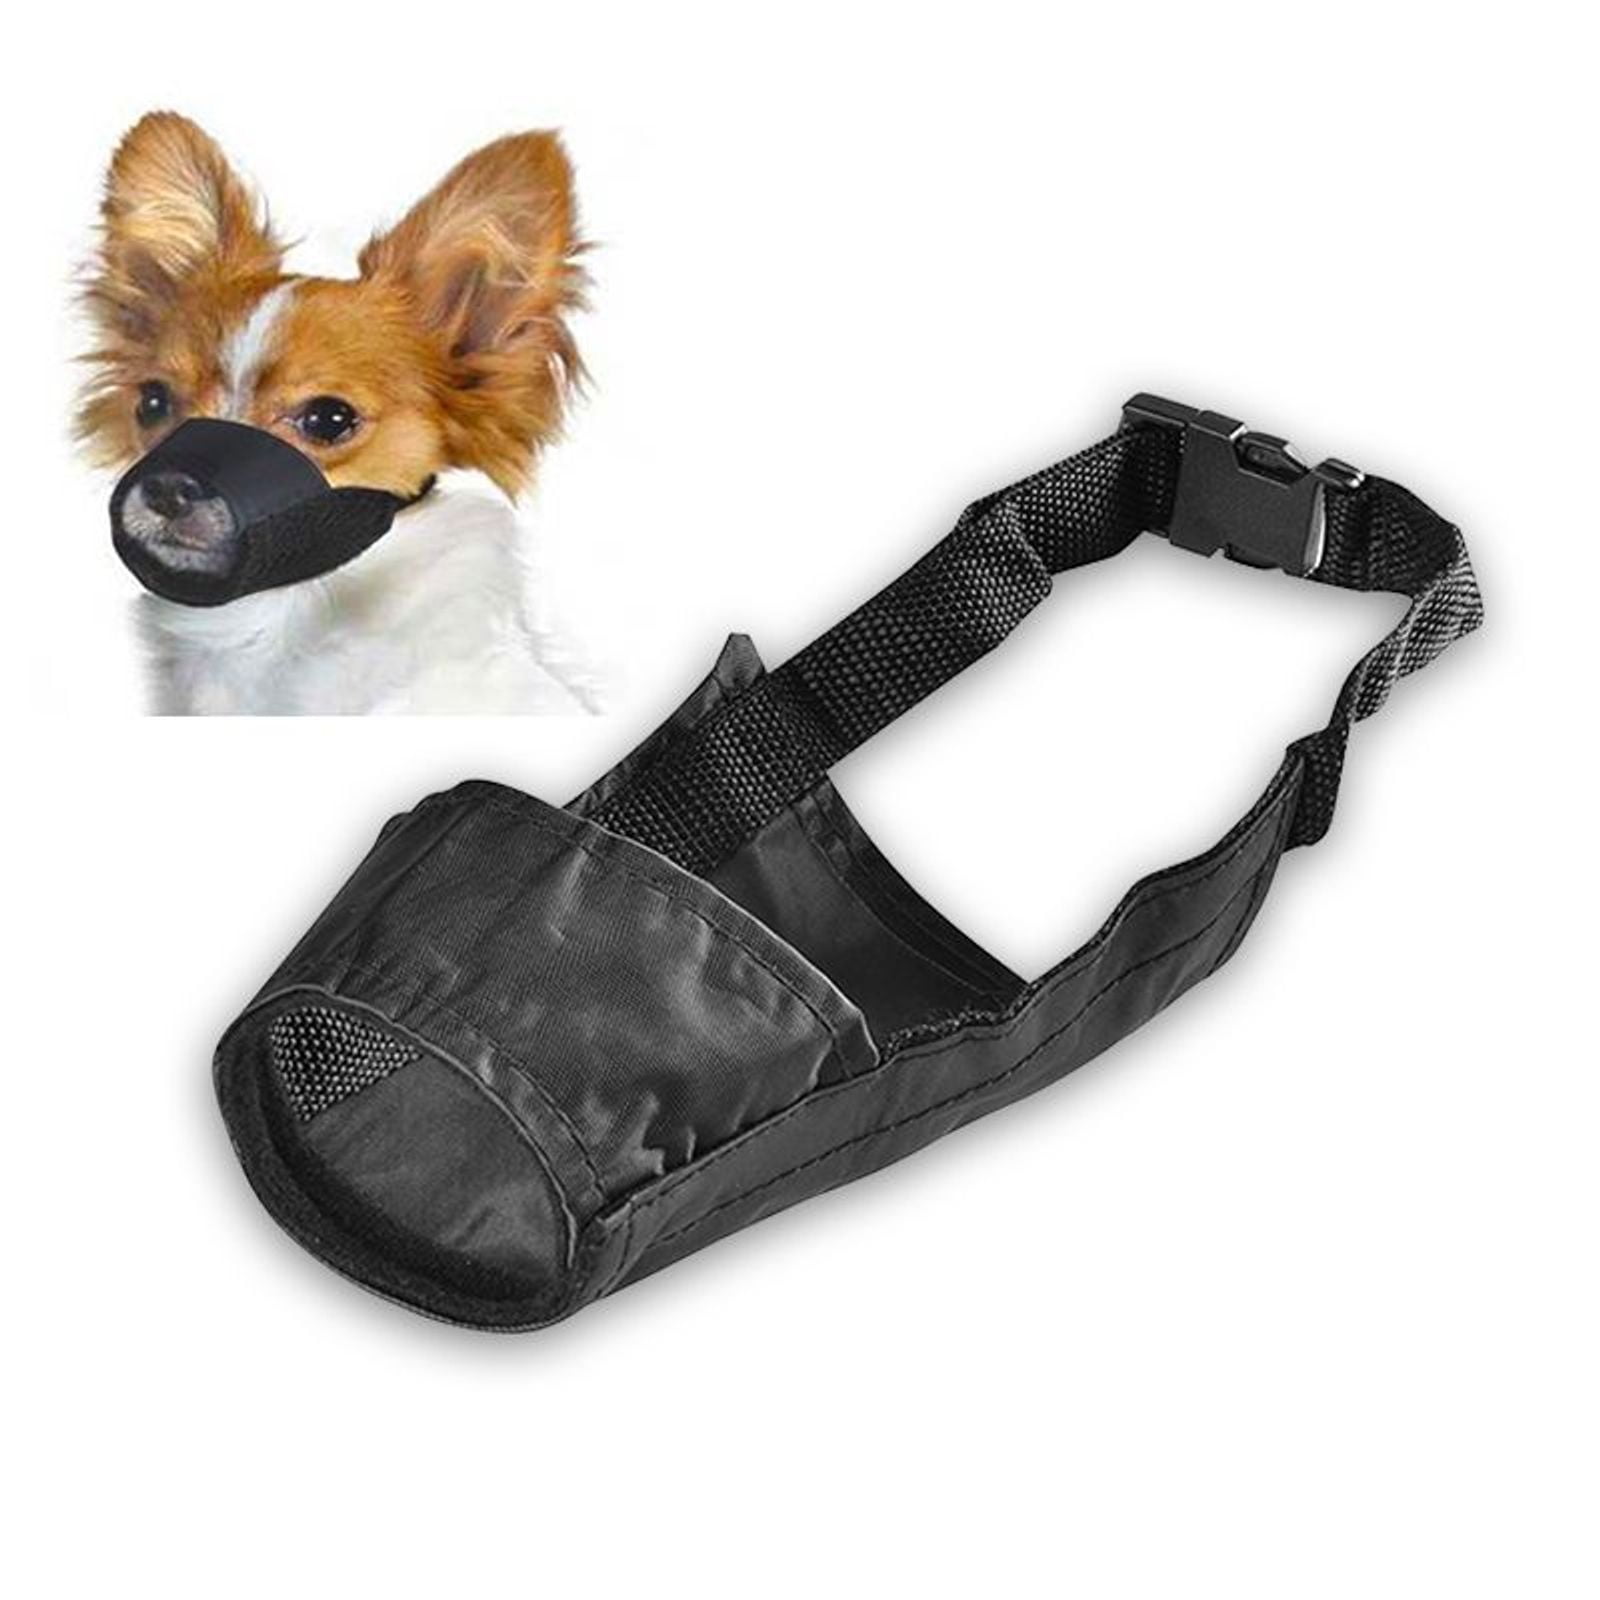 1 heiyun Pet Dog Muzzle Breathable Anti-Biting Plastic Bark Mesh Pet Supplies Dog Mask Mouth Grooming